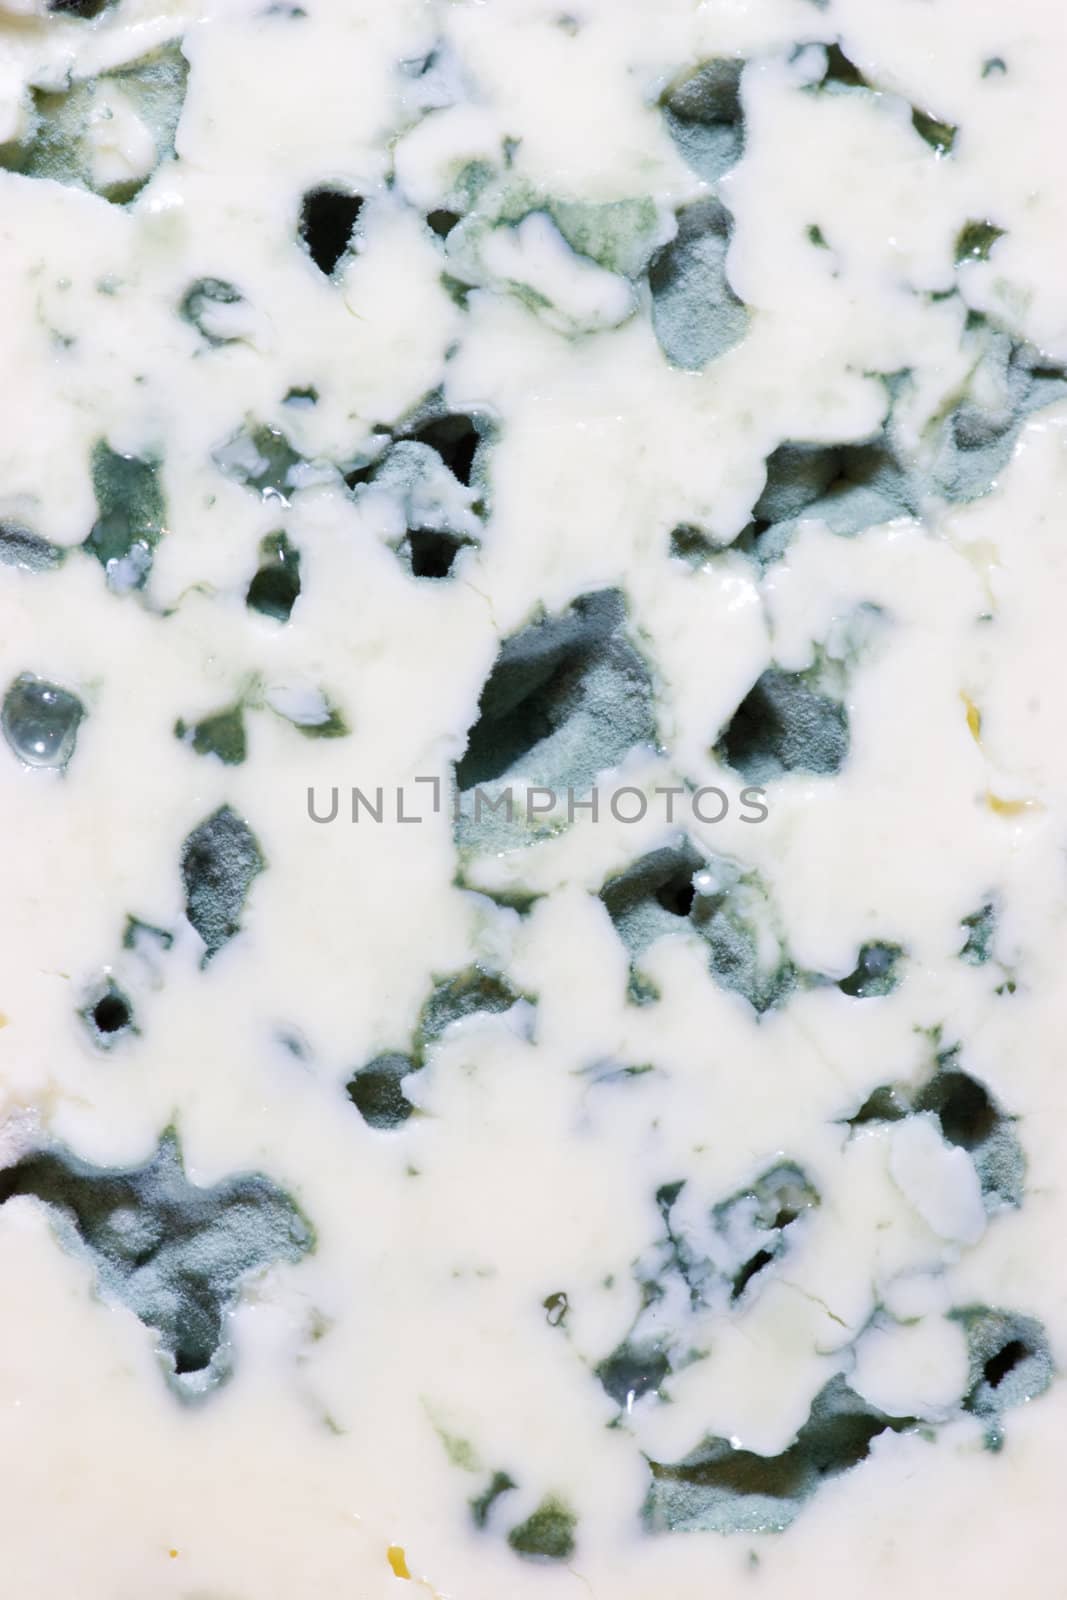 Blue cheese by naumoid